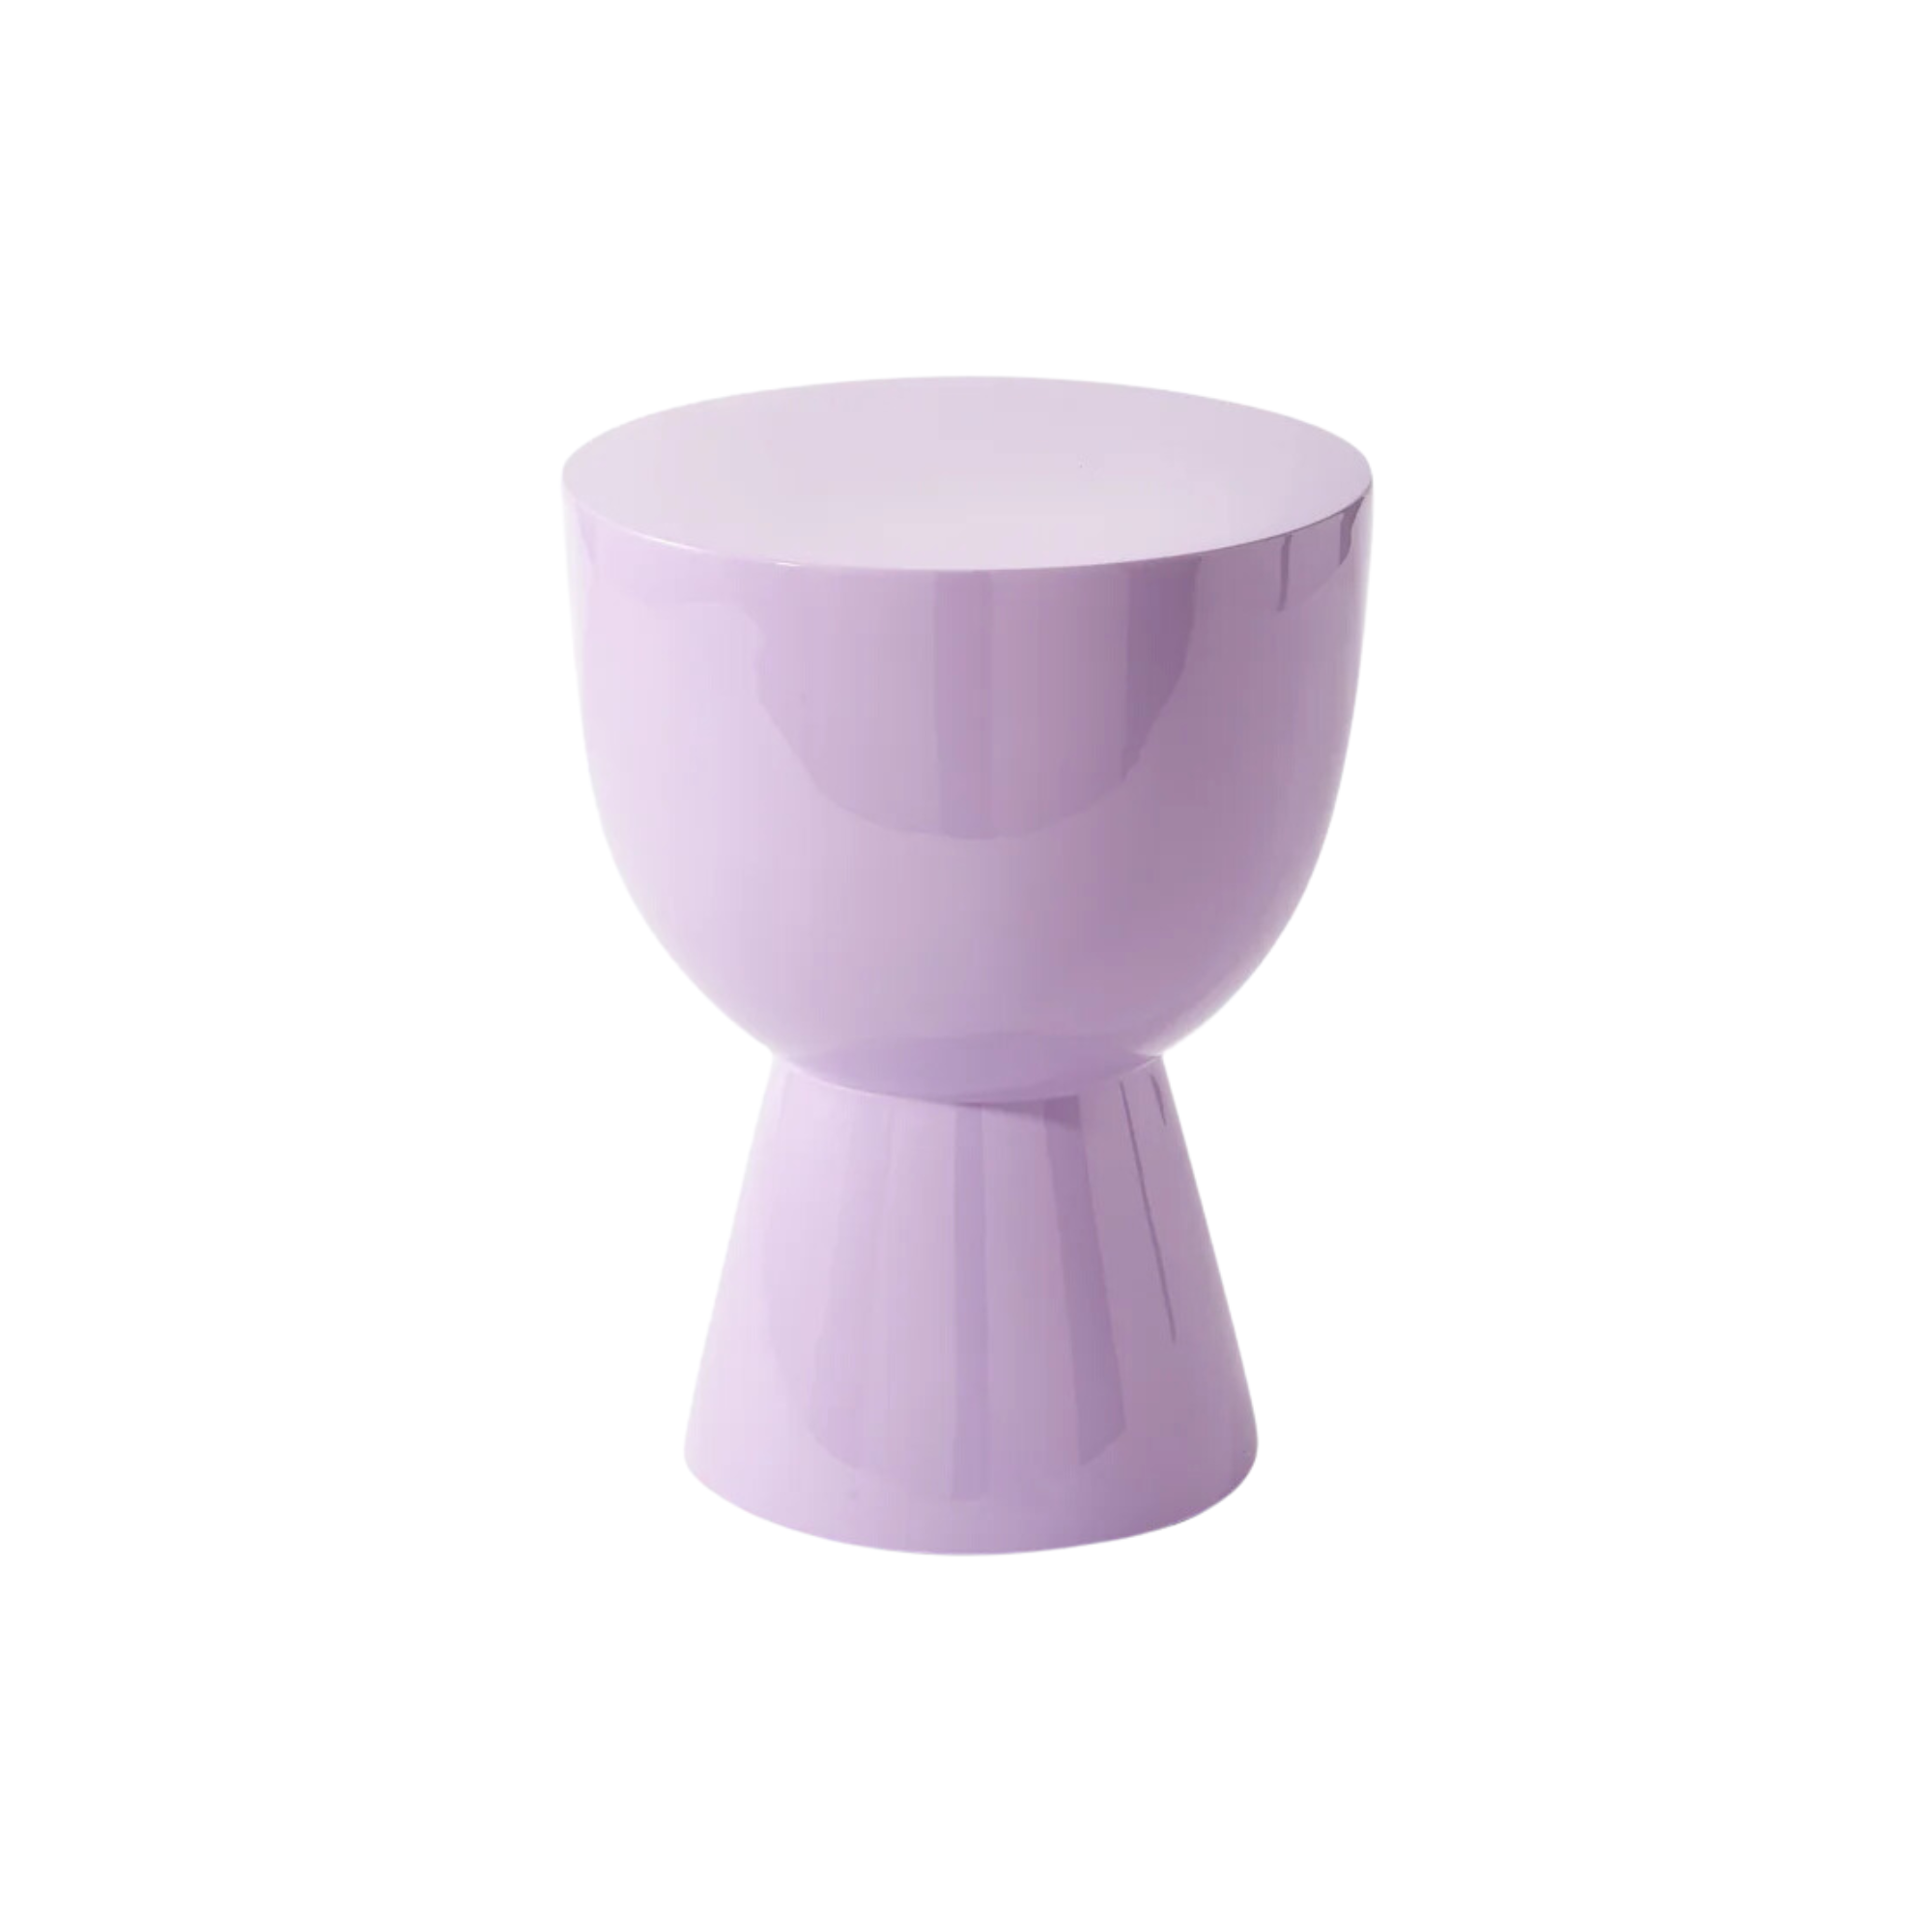 A lilac purple side table